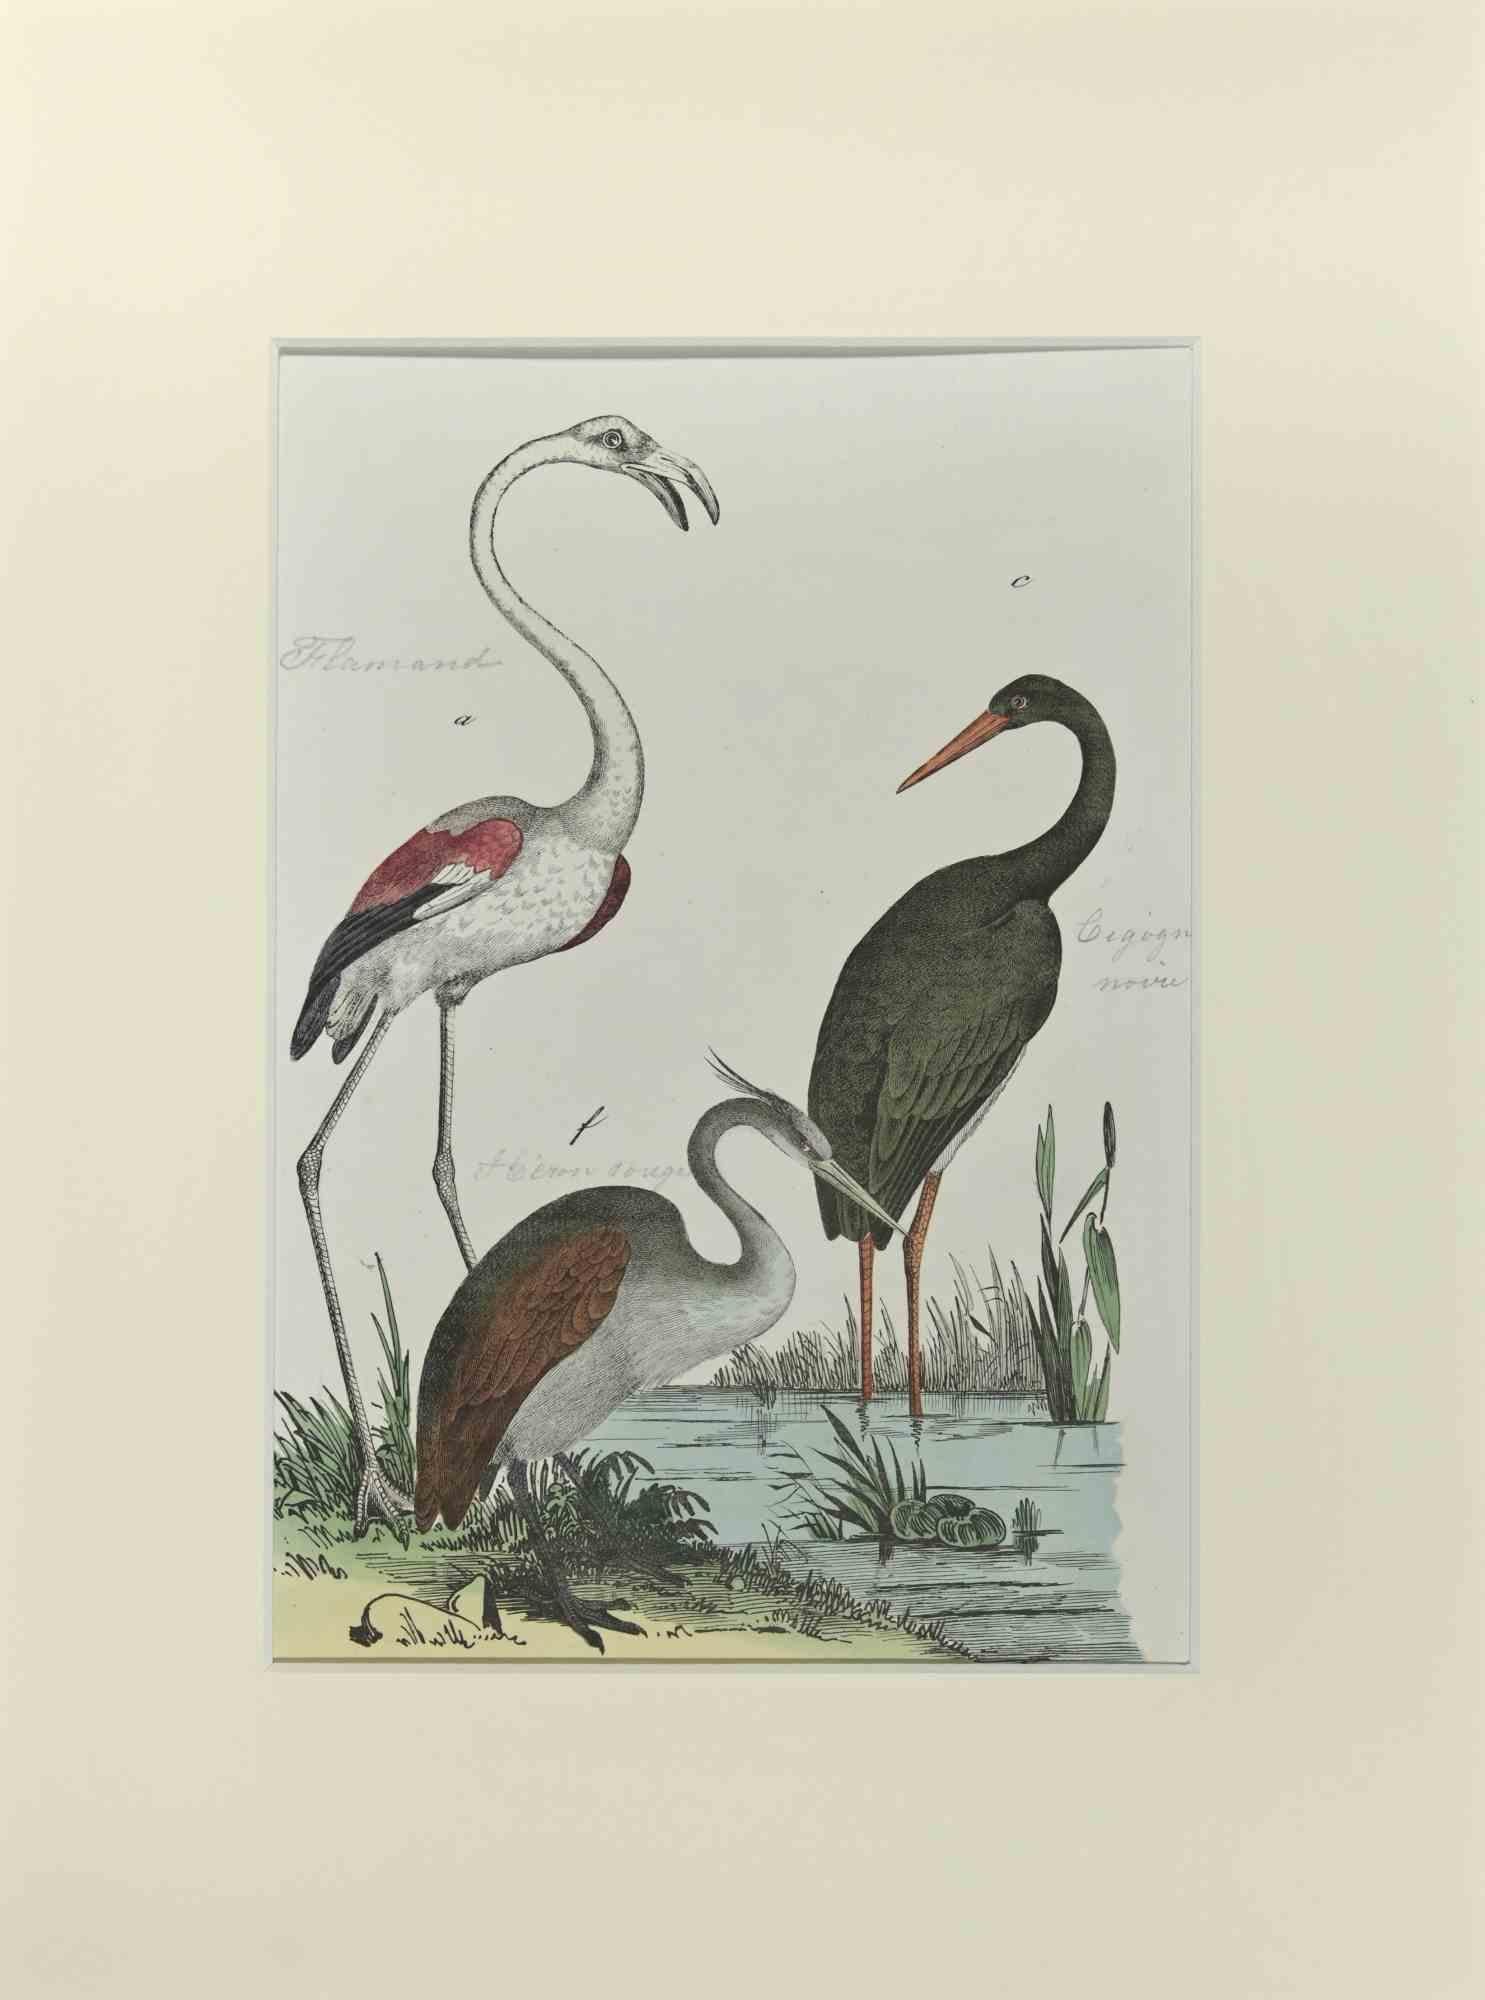 Flamingo is an Etching hand colored realized by Gotthilf Heinrich von Schubert - Johann Friedrich Naumann, Illustration from Natural history of birds in pictures, published by Stuttgart and Esslingen, Schreiber and Schill 1840 ca. 

Johann Friedrich